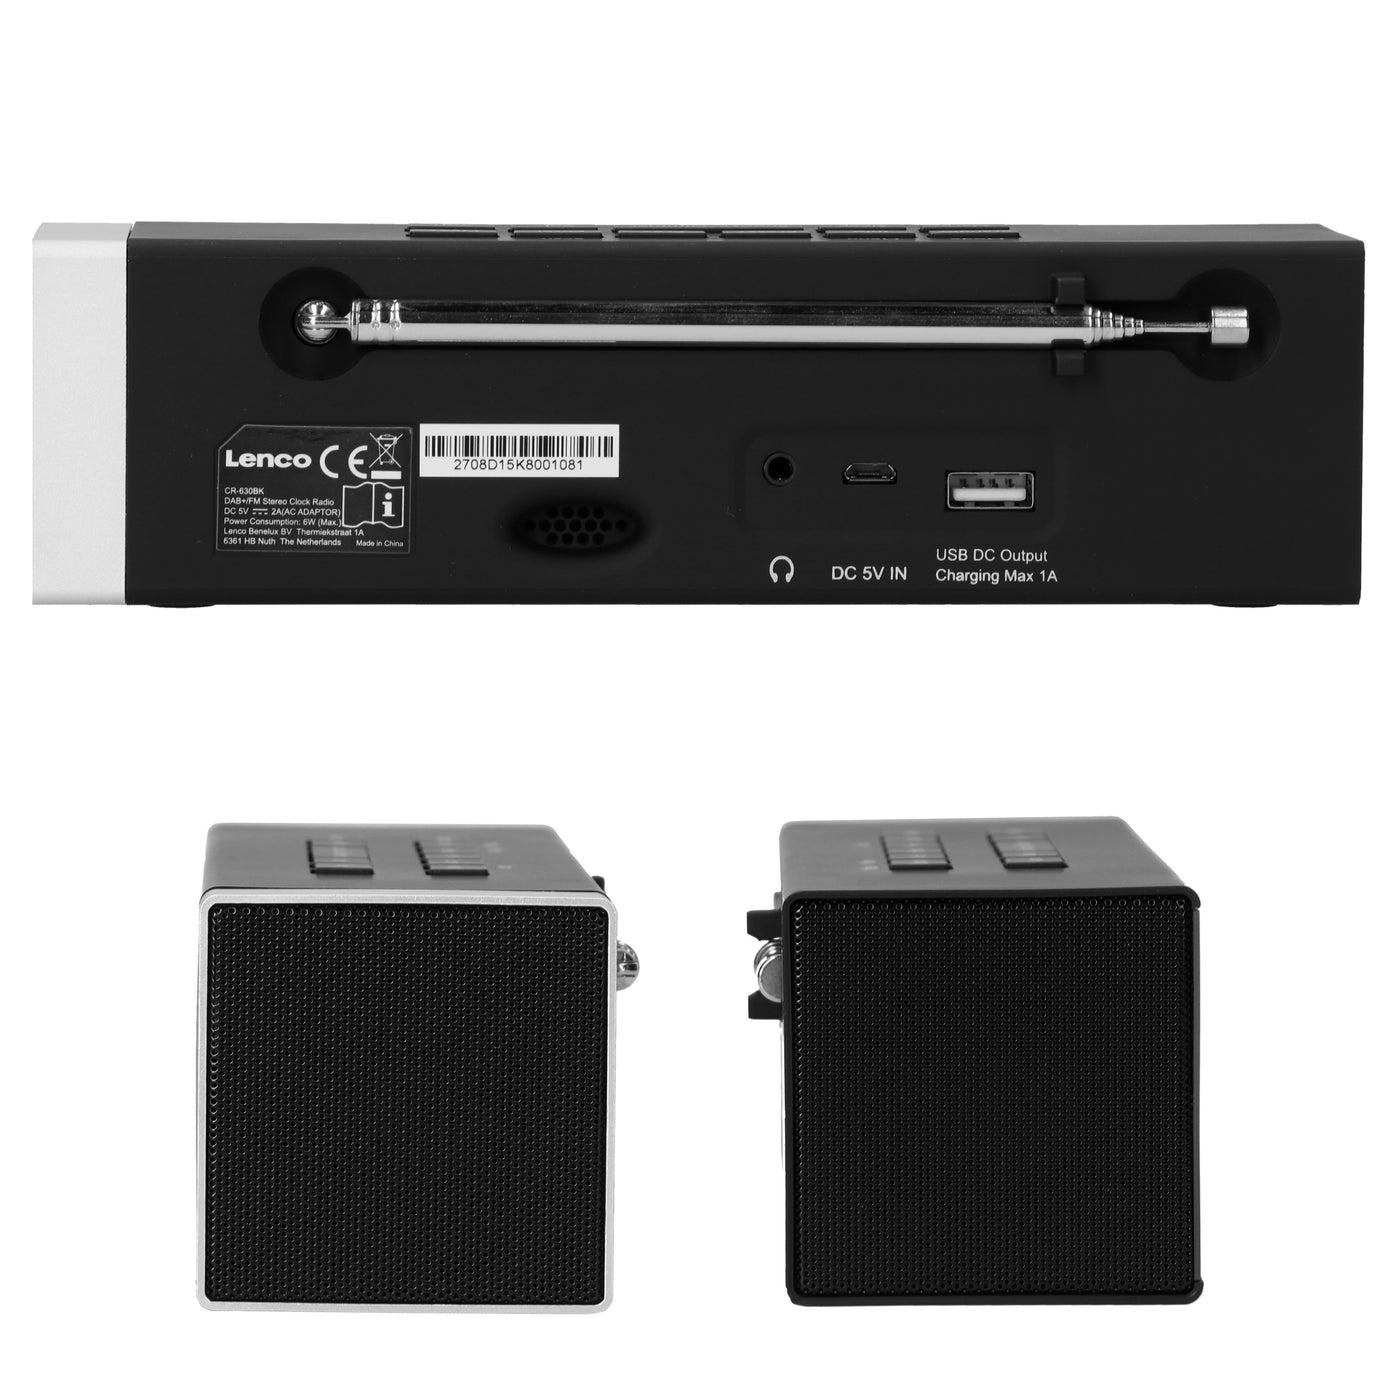 Lenco CR-630BK - Stereo DAB+/FM Radiowecker mit großem Display - USB-Anschluß mit Ladefunktion - 2 x 2 Watt RMS - Schwarz